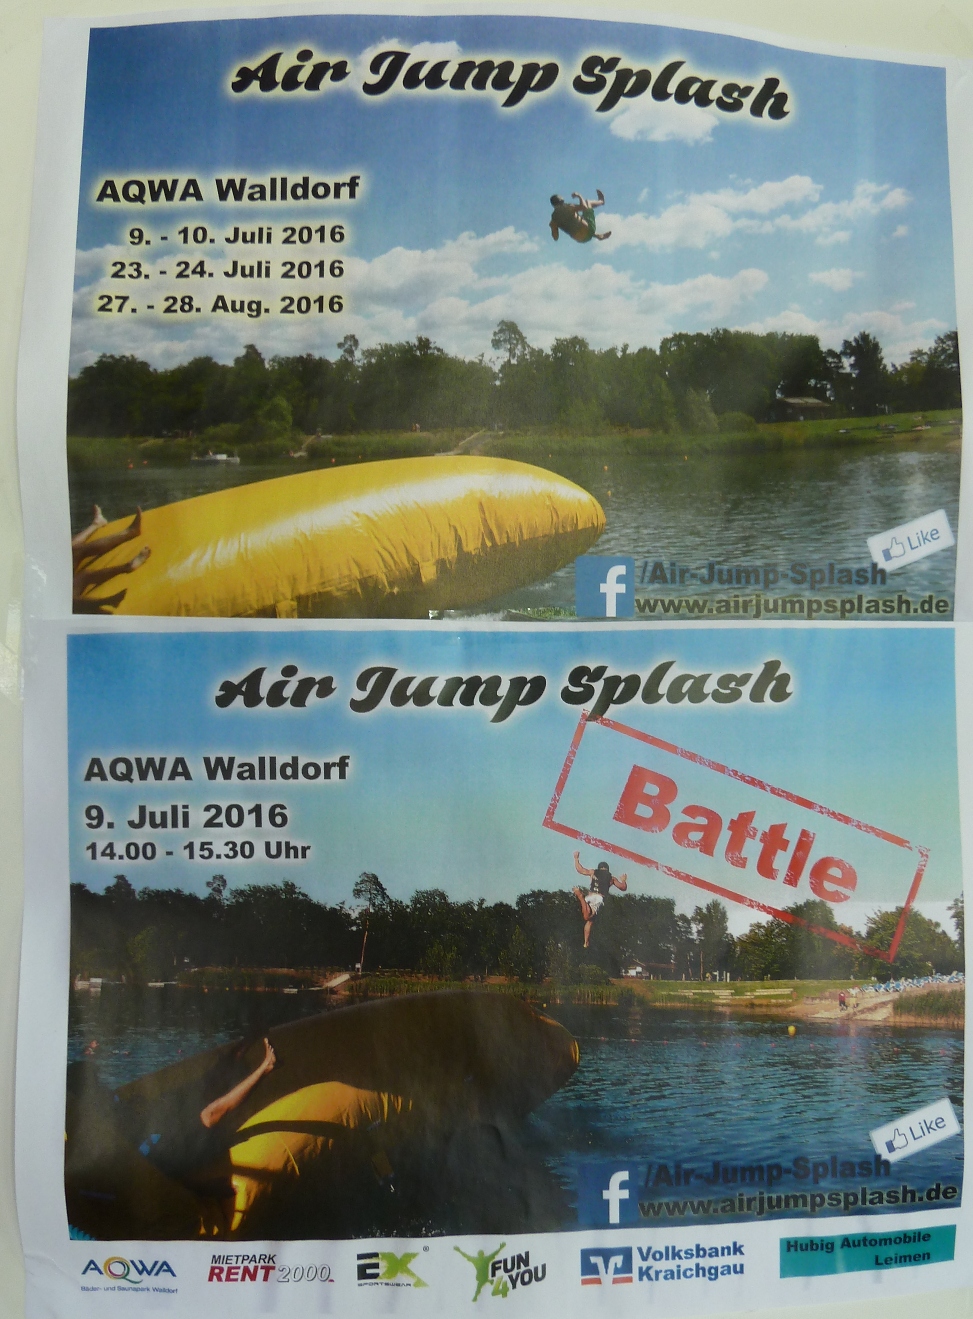 AQWA Walldorf: Air Jump Splash Battle 2016